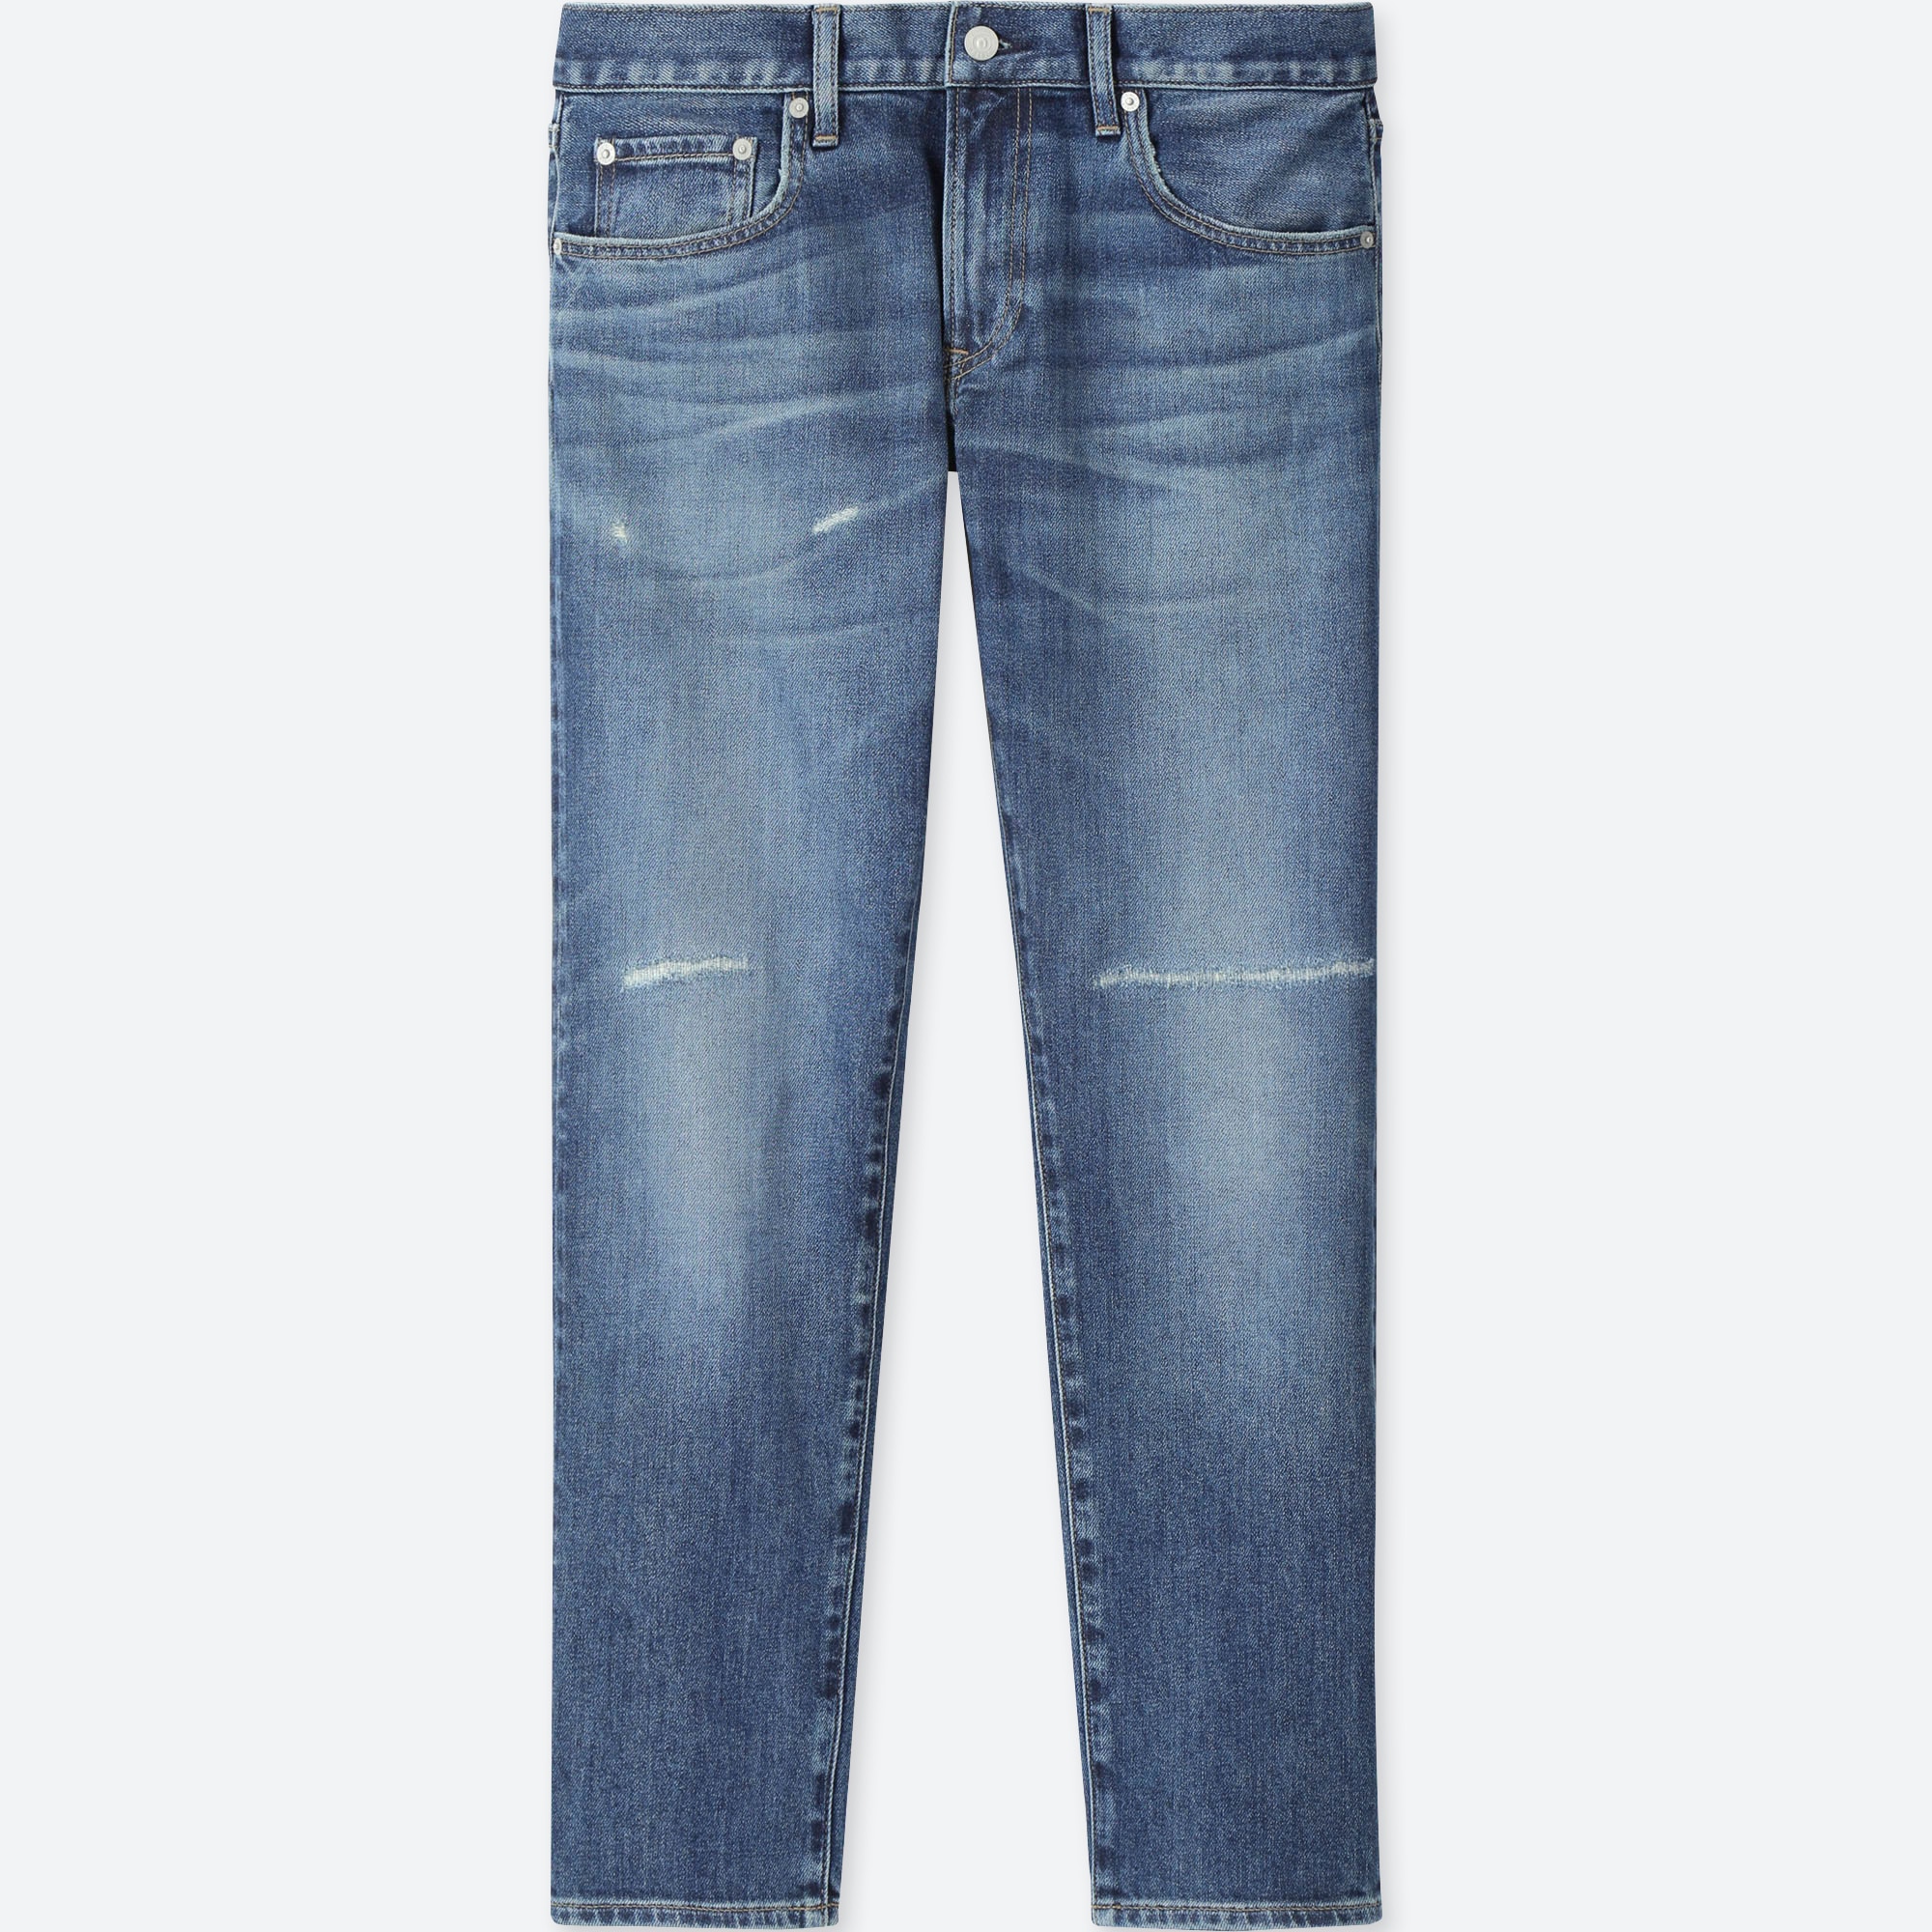 narrow fit jeans mens